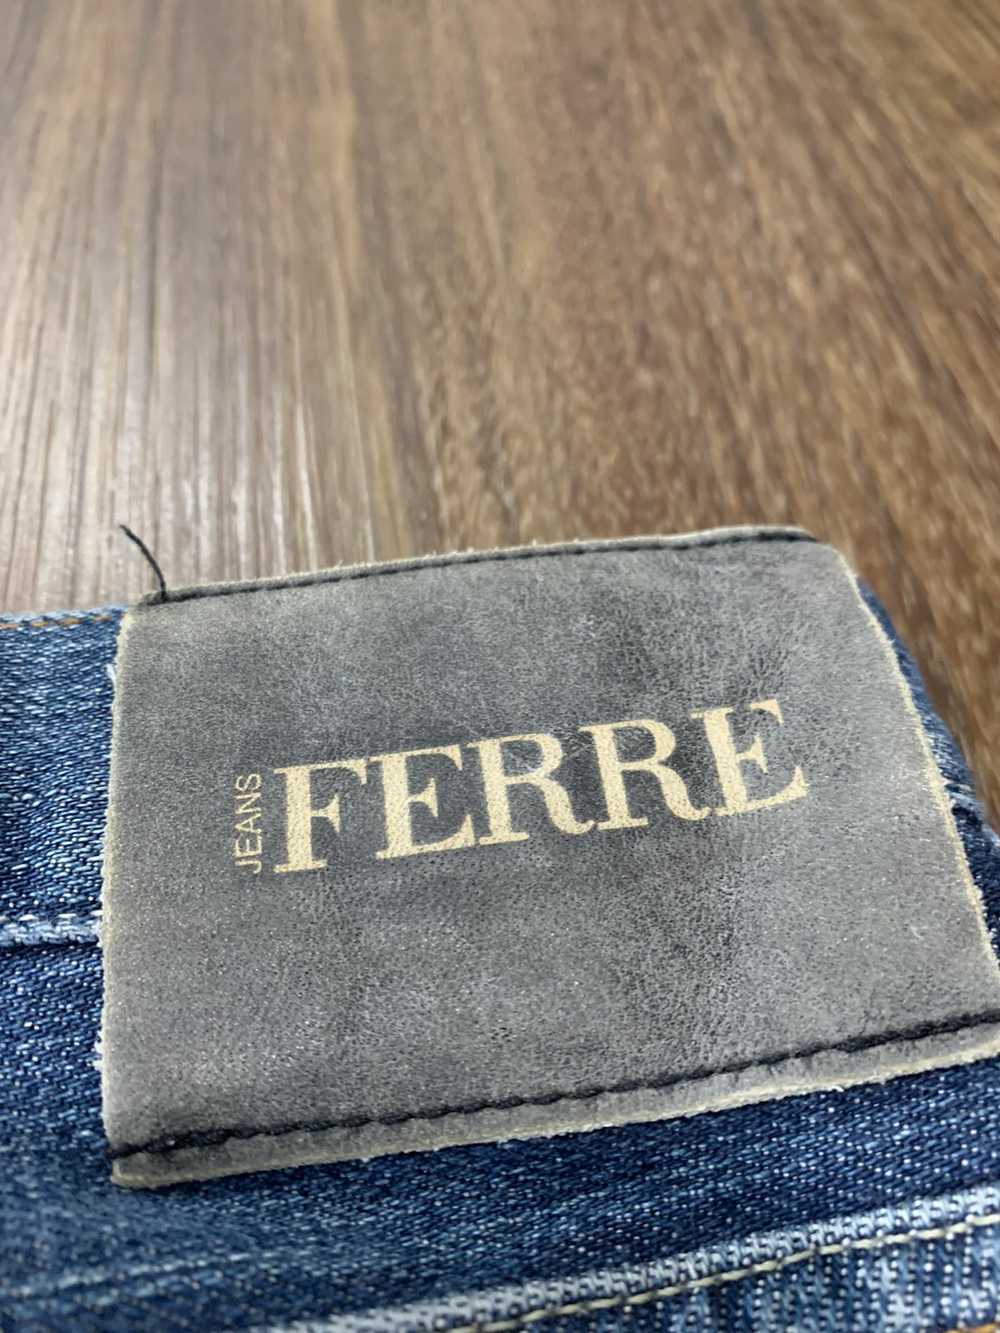 Ferre × Gianfranco Ferre Jeans Ferre Italy Denim - image 7